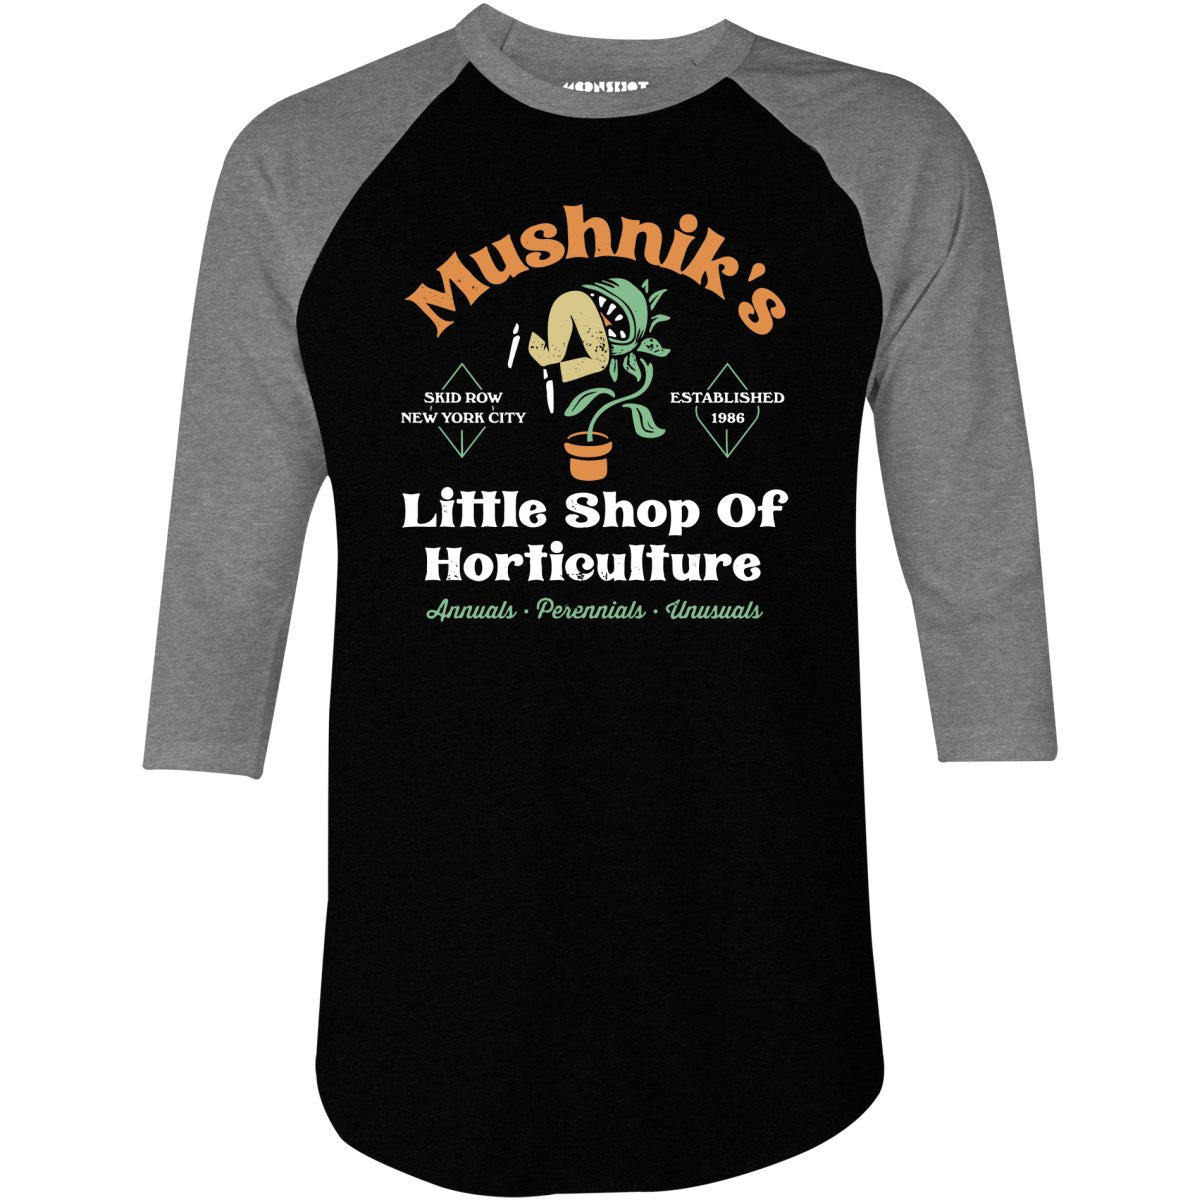 Mushnik's Little Shop of Horticulture - 3/4 Sleeve Raglan T-Shirt